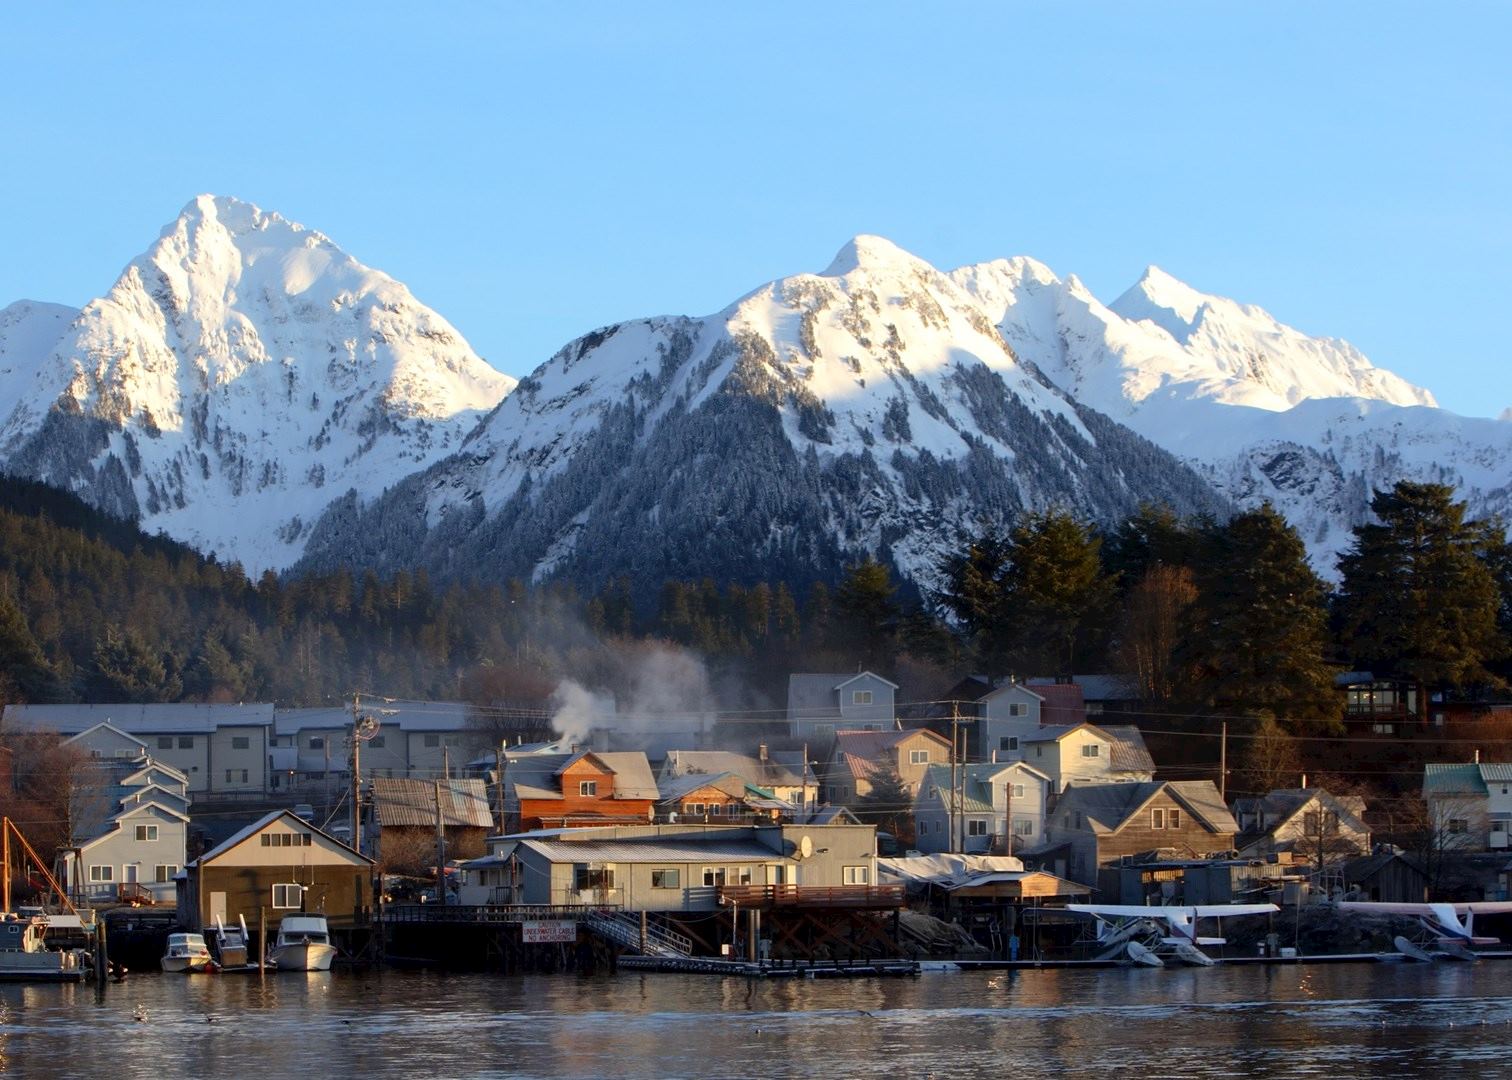 File:Anchorage, Alaska, USA.jpg - Wikimedia Commons